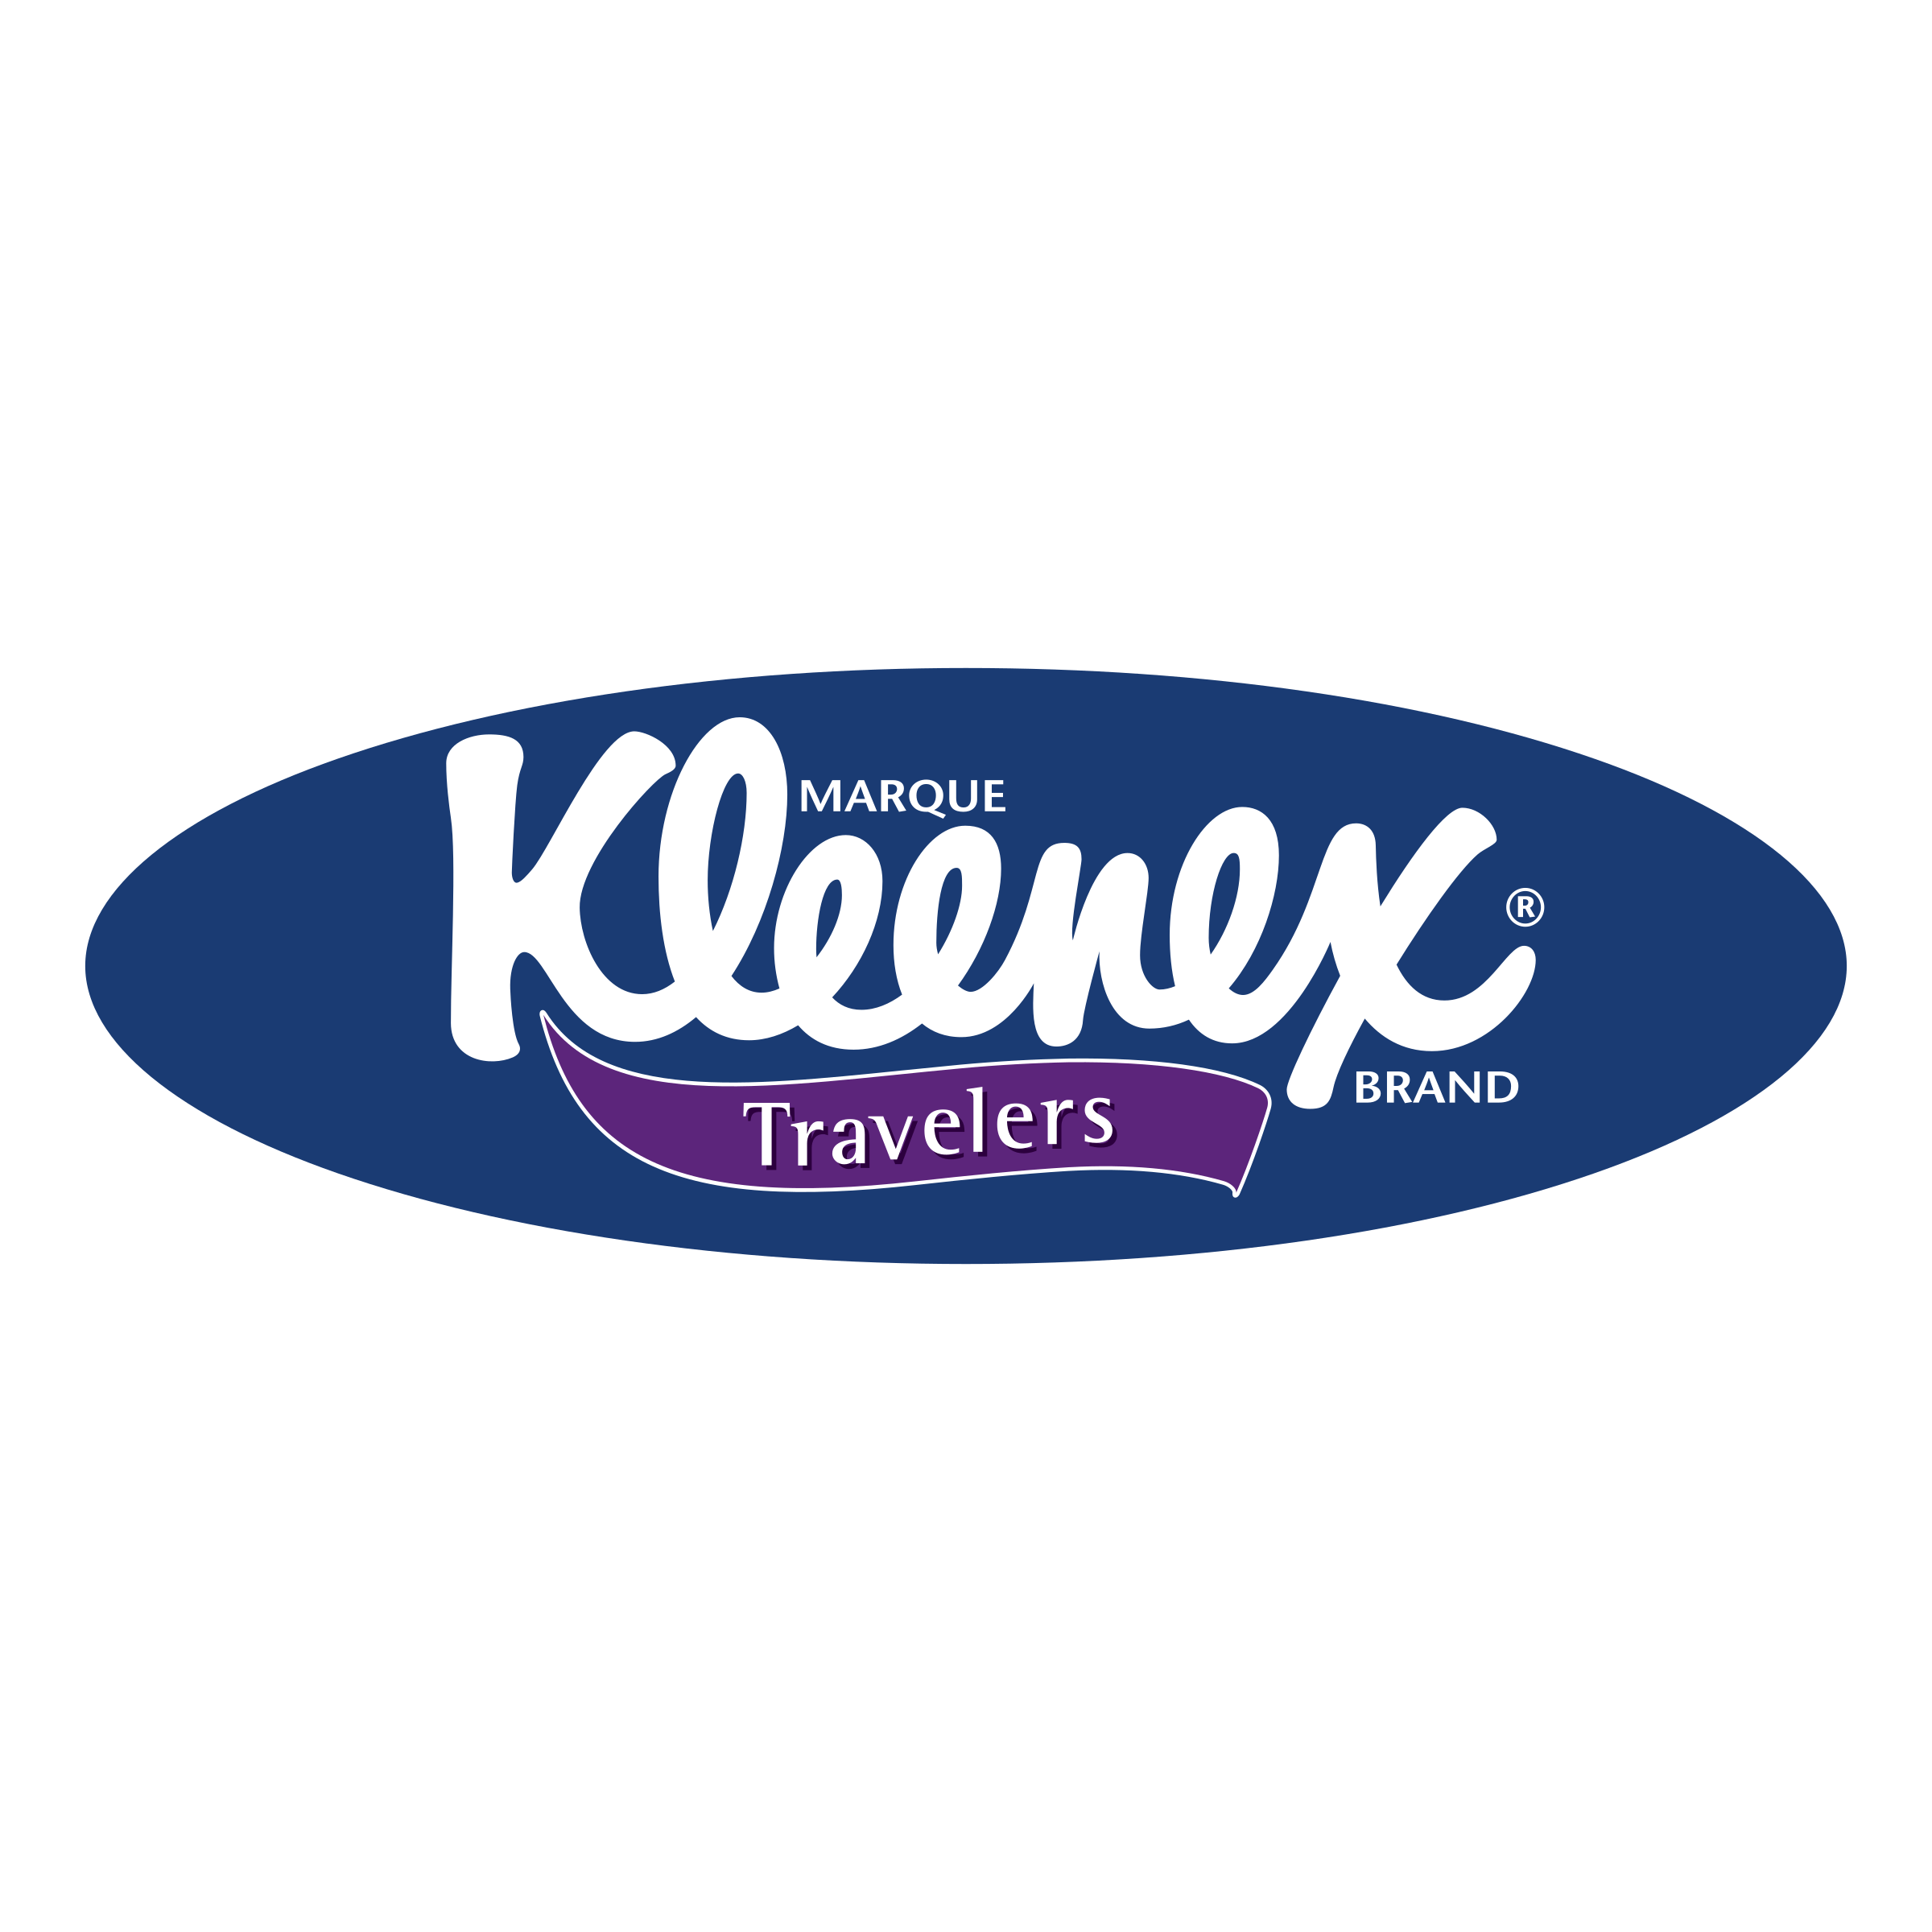 Kleenix Logo - Kleenex Logo PNG Transparent & SVG Vector - Freebie Supply